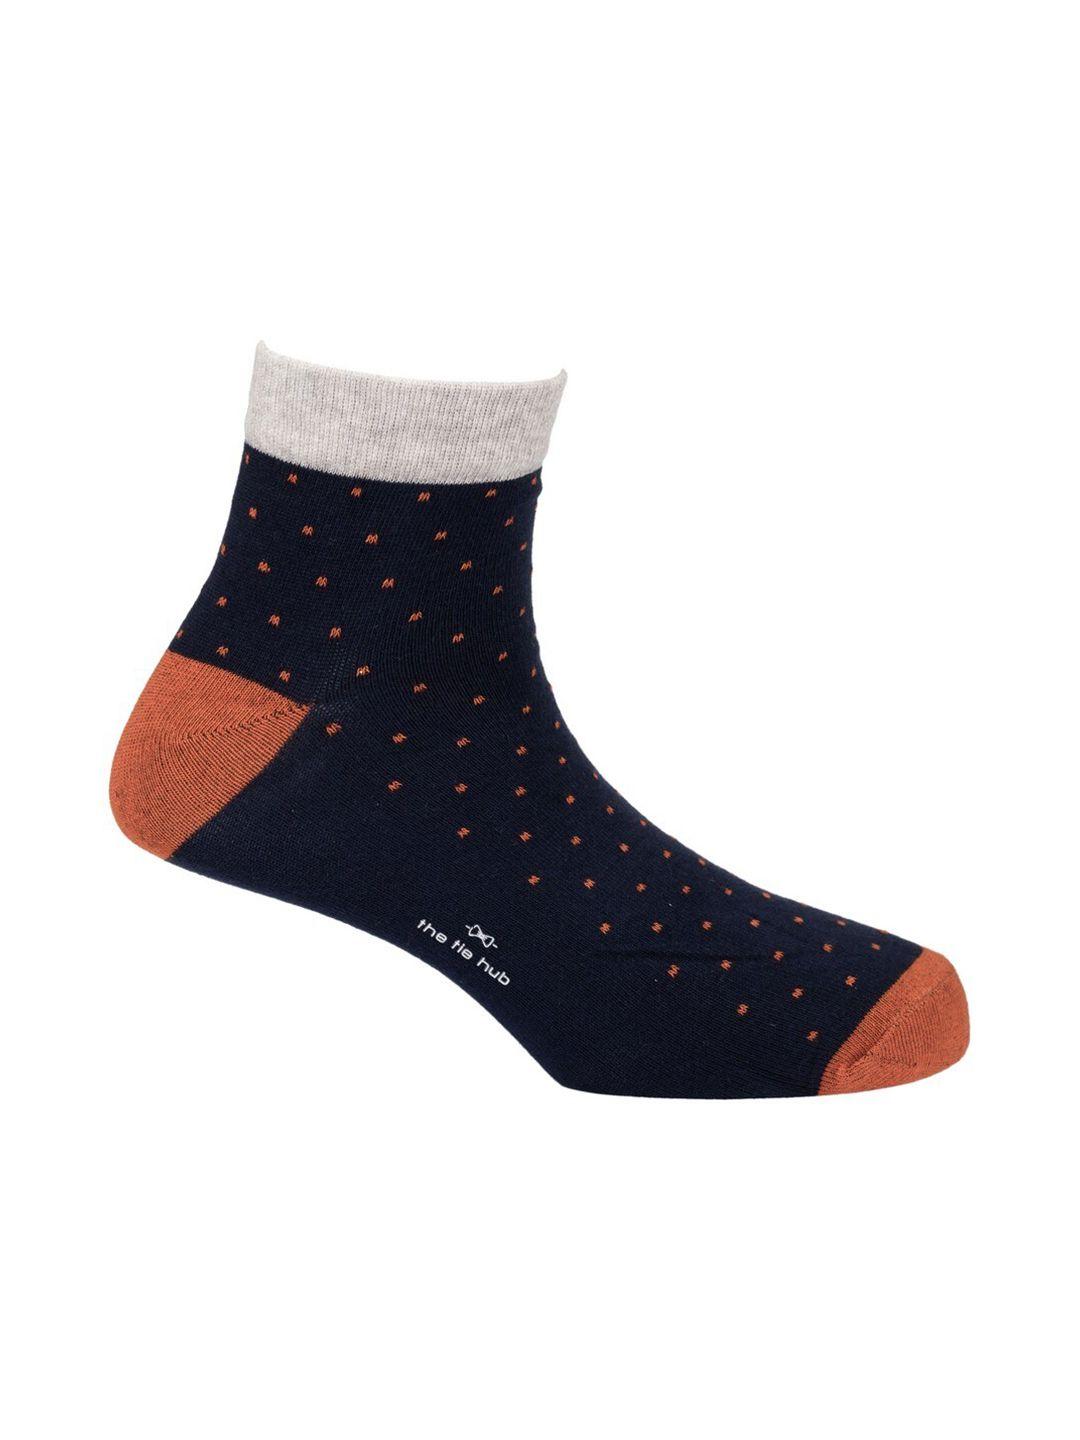 the-tie-hub-navy-blue-&-orange-polka-dot-ankle-length-socks